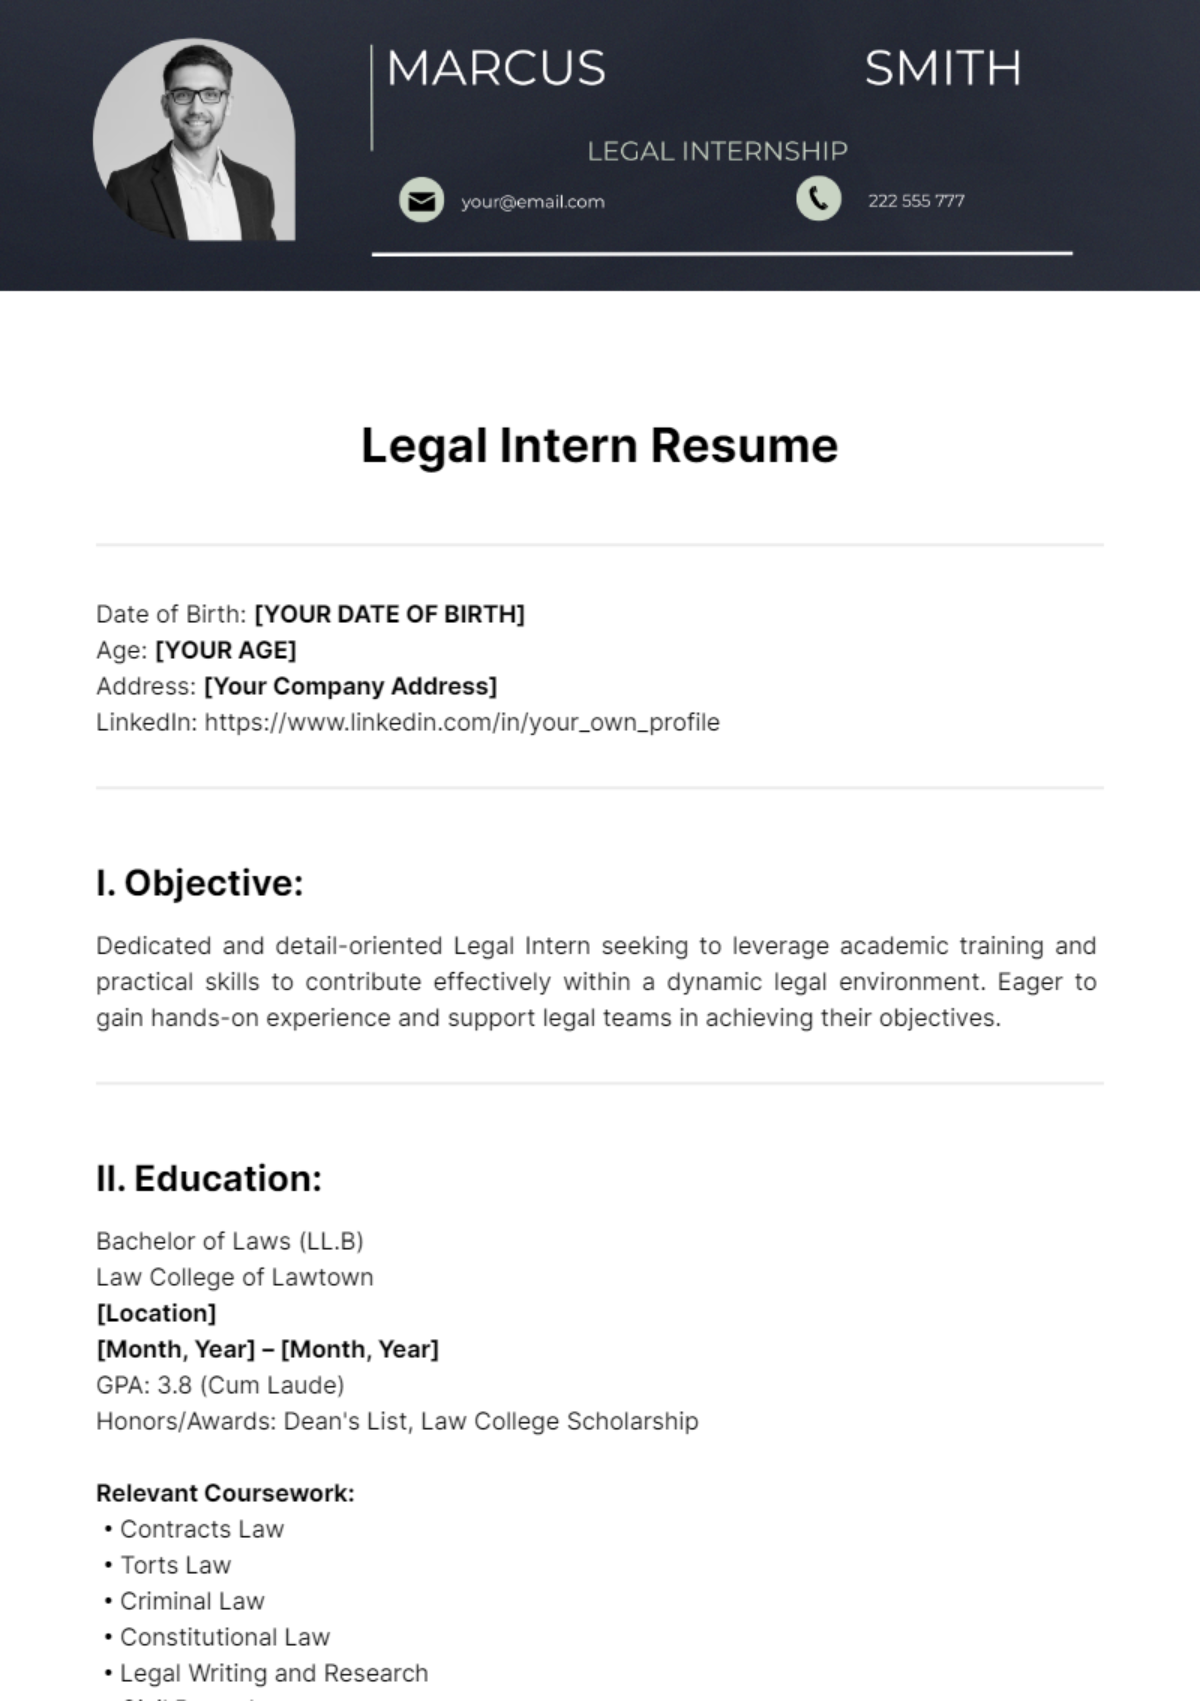 Legal Intern Resume Template